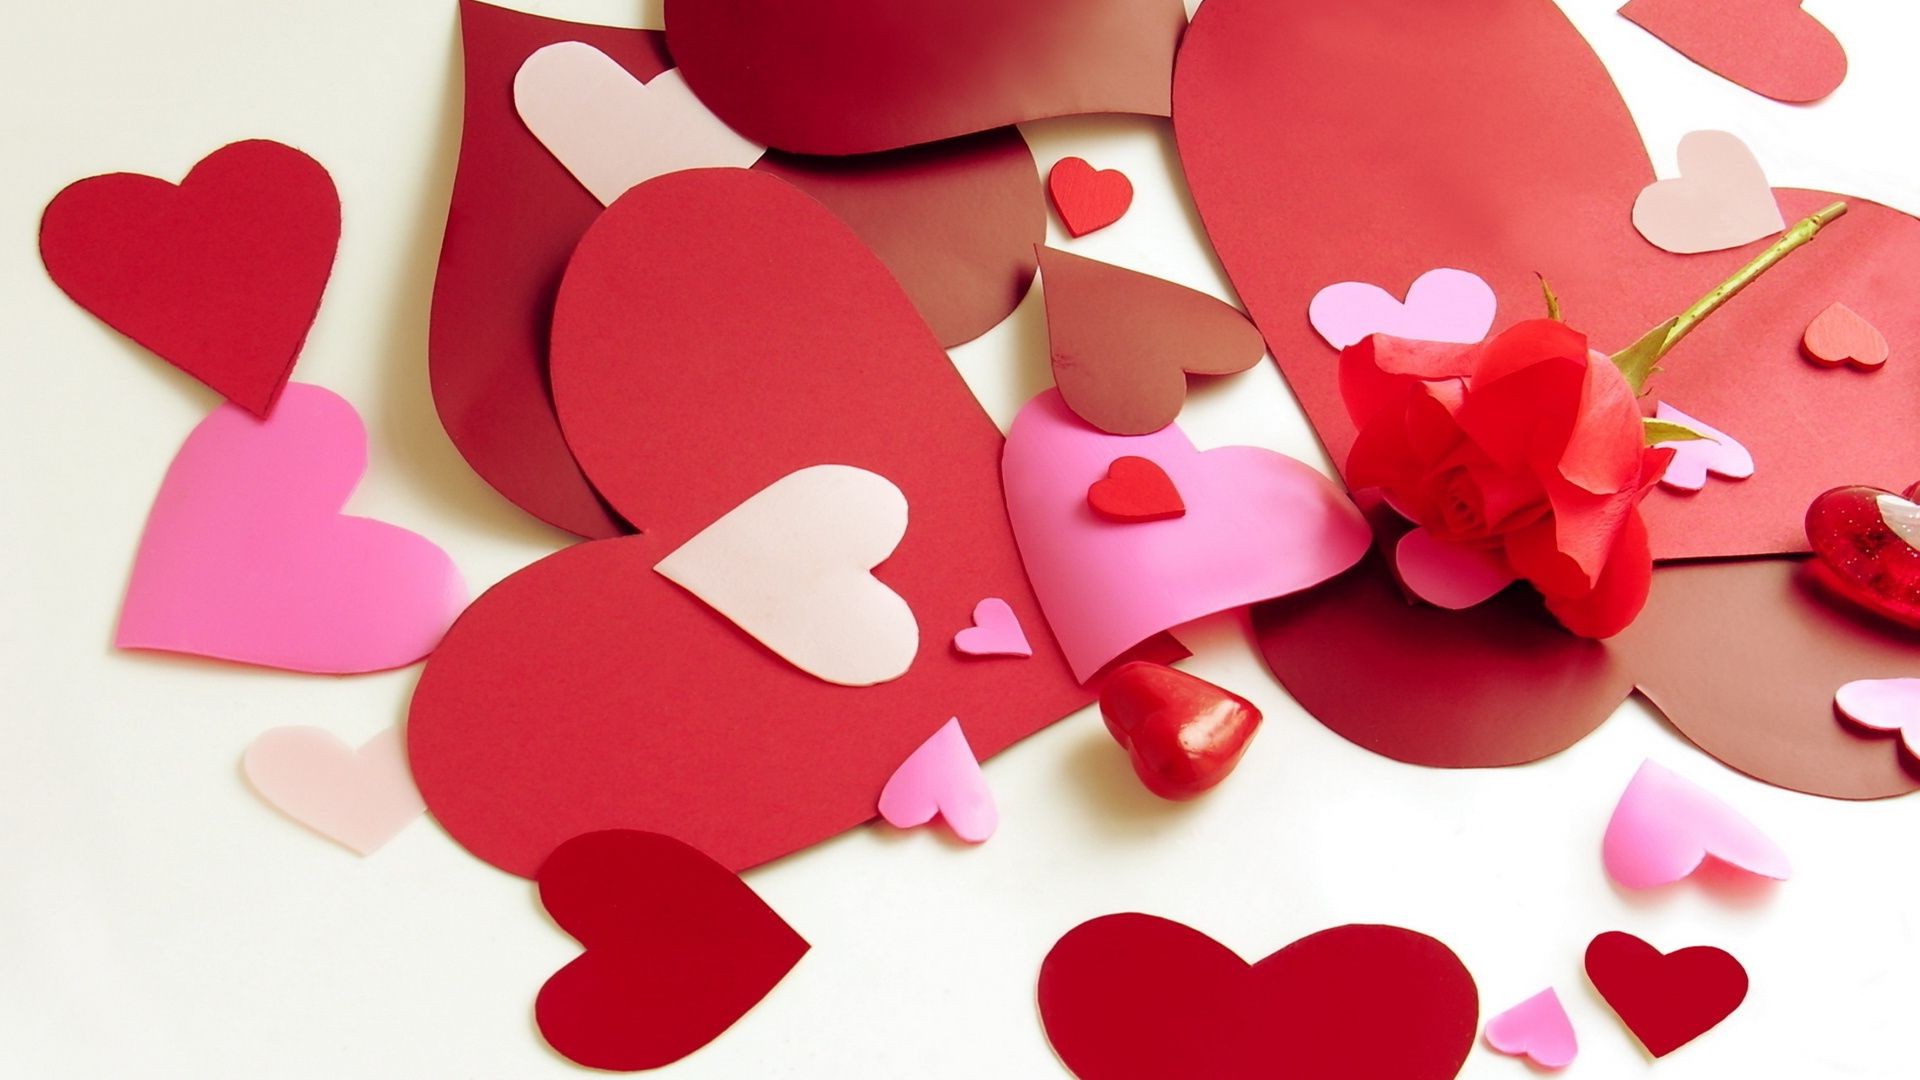 hearts romance love heart romantic valentines day affection marriage cupid affair wedding flirt gift sweetheart